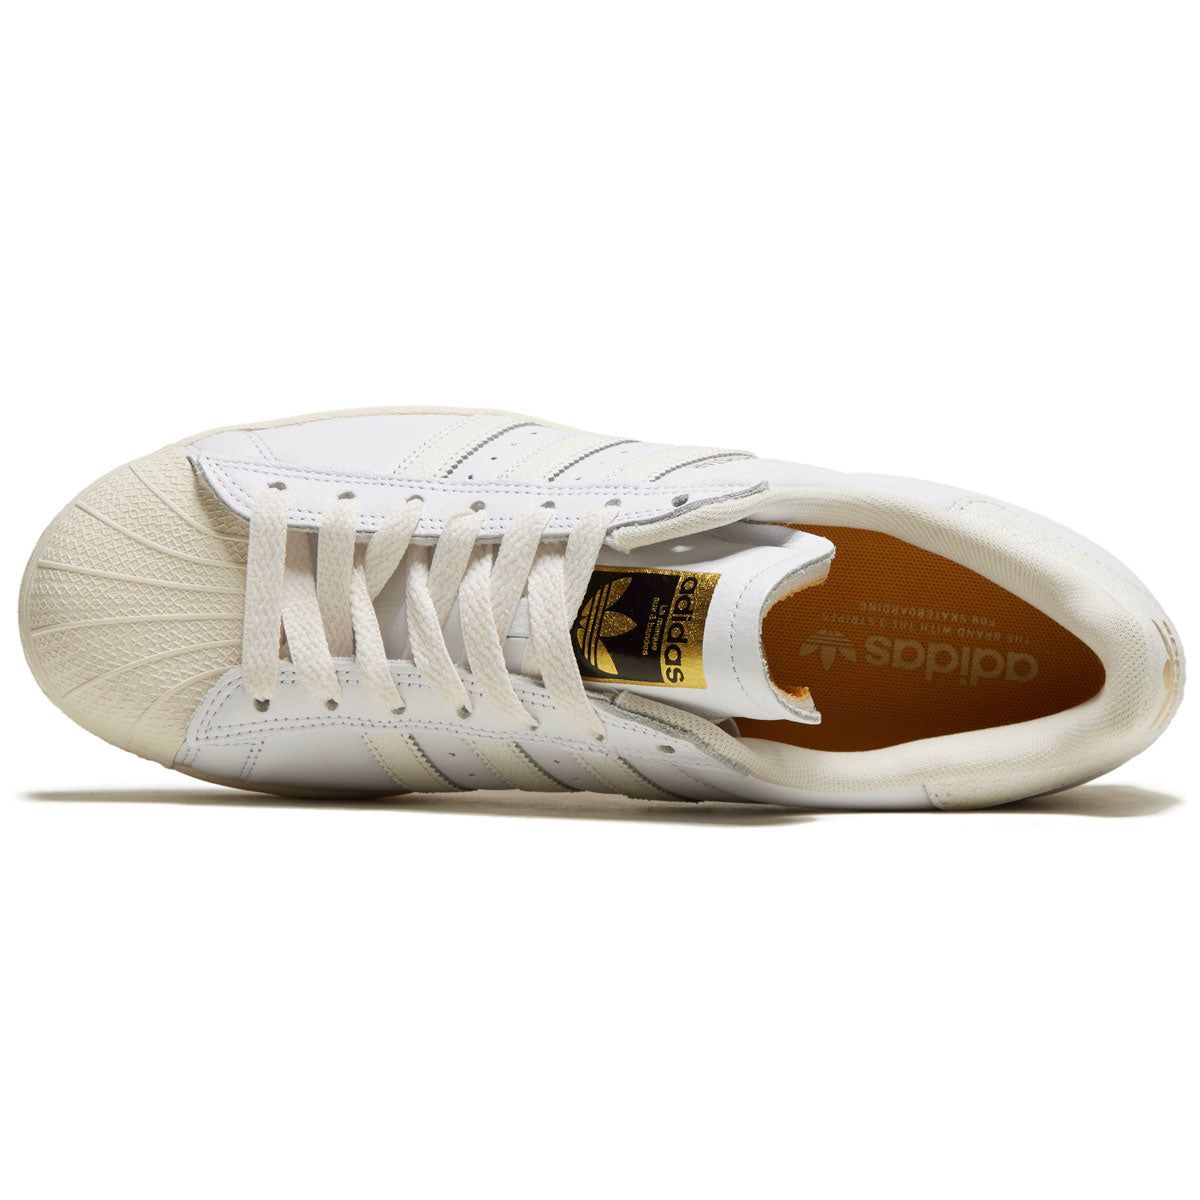 Adidas Superstar ADV Shoes - White/White/Chalk White image 3